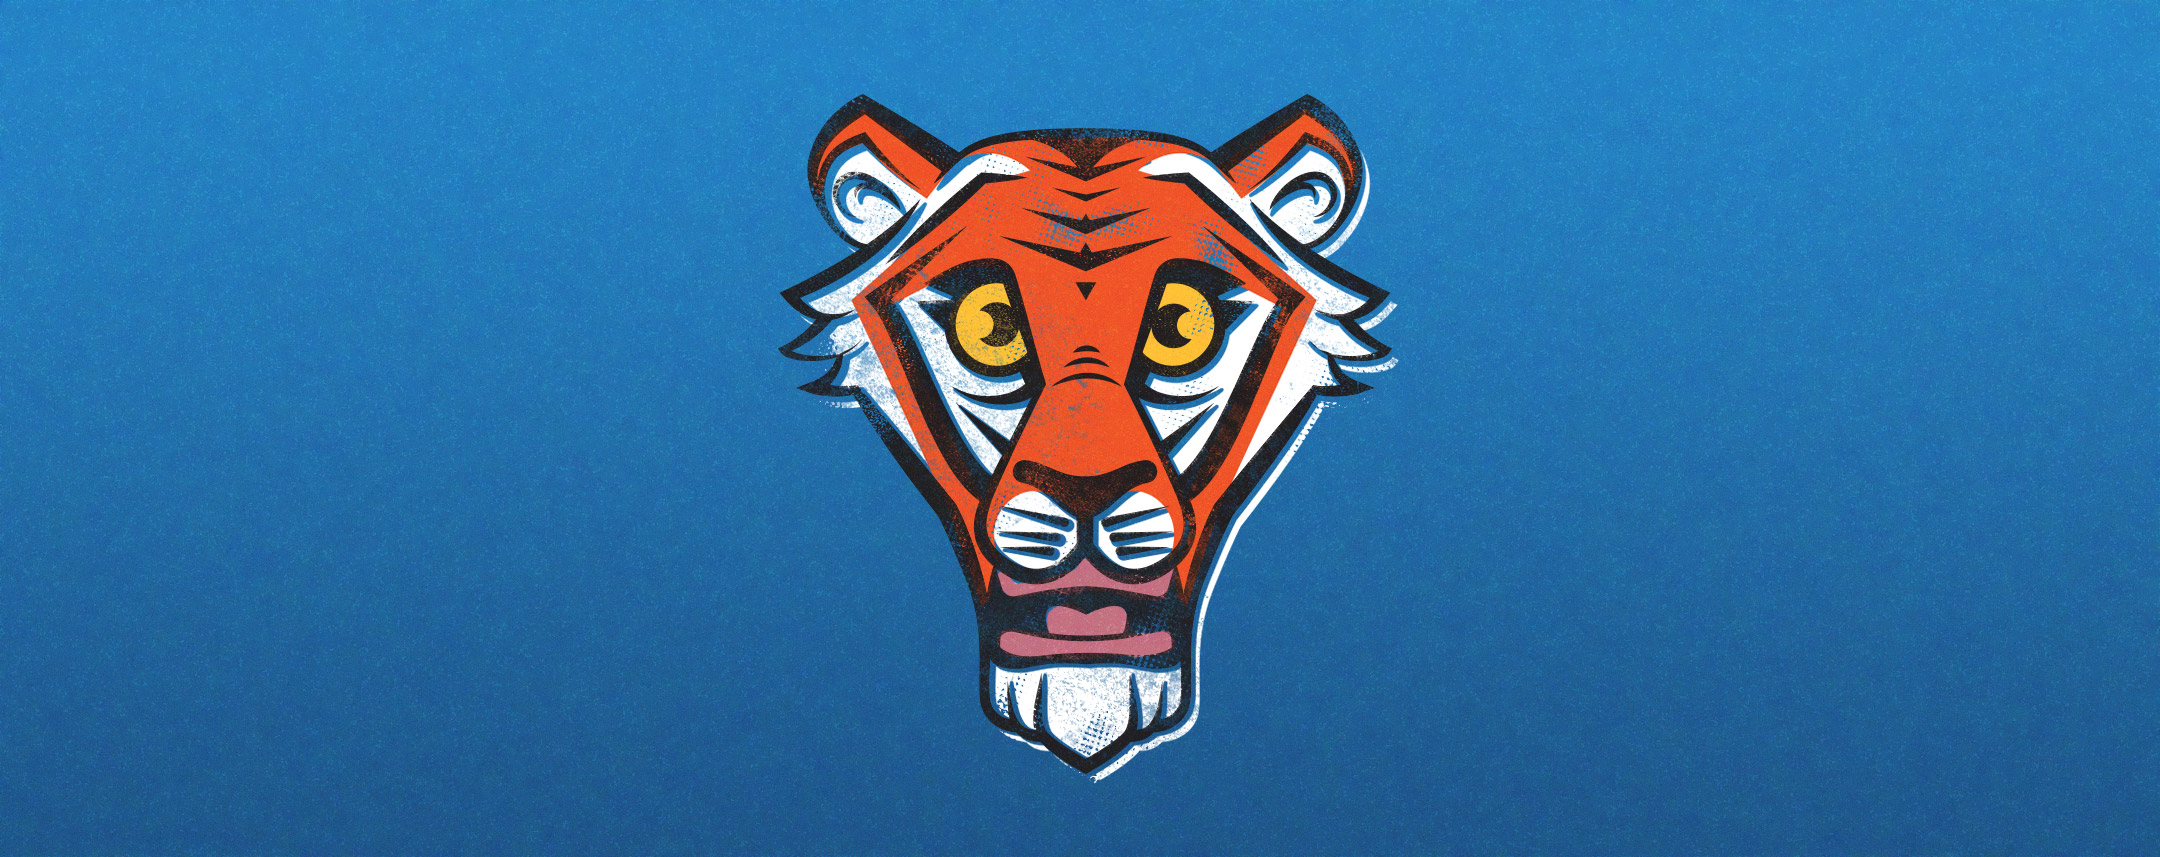 Tiger-FEATURED.jpg